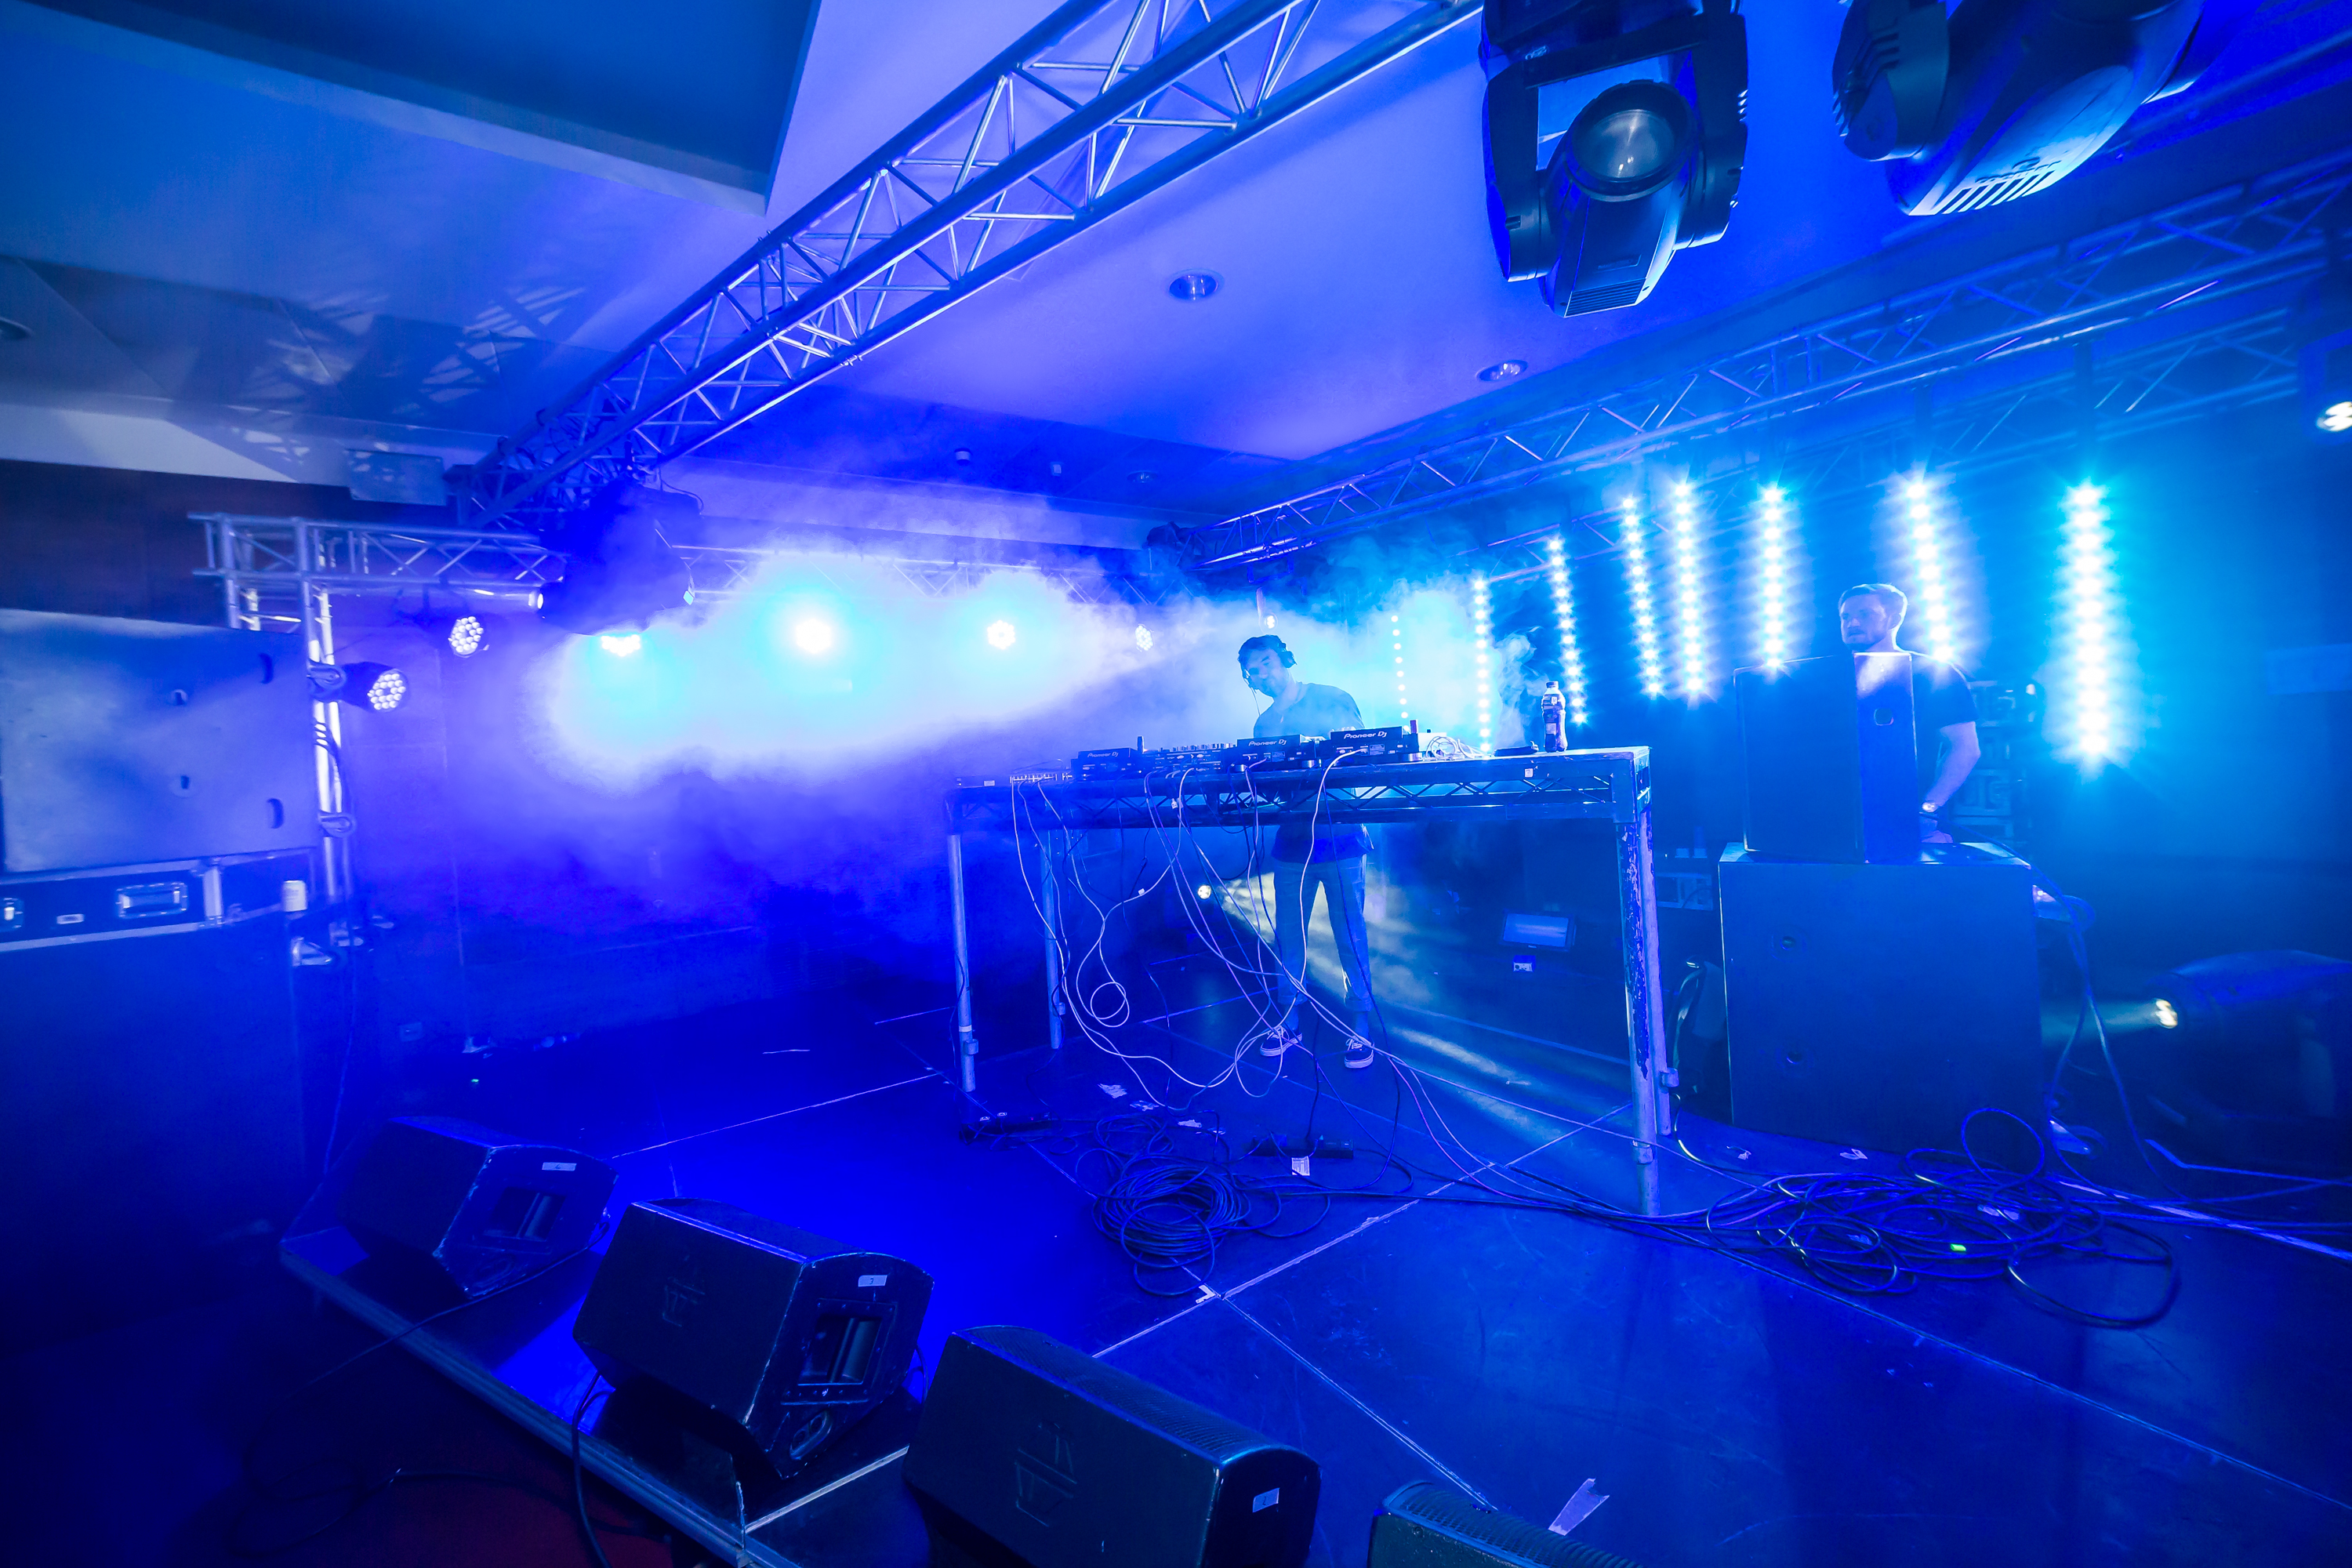 DJs on stage lit up in blue.